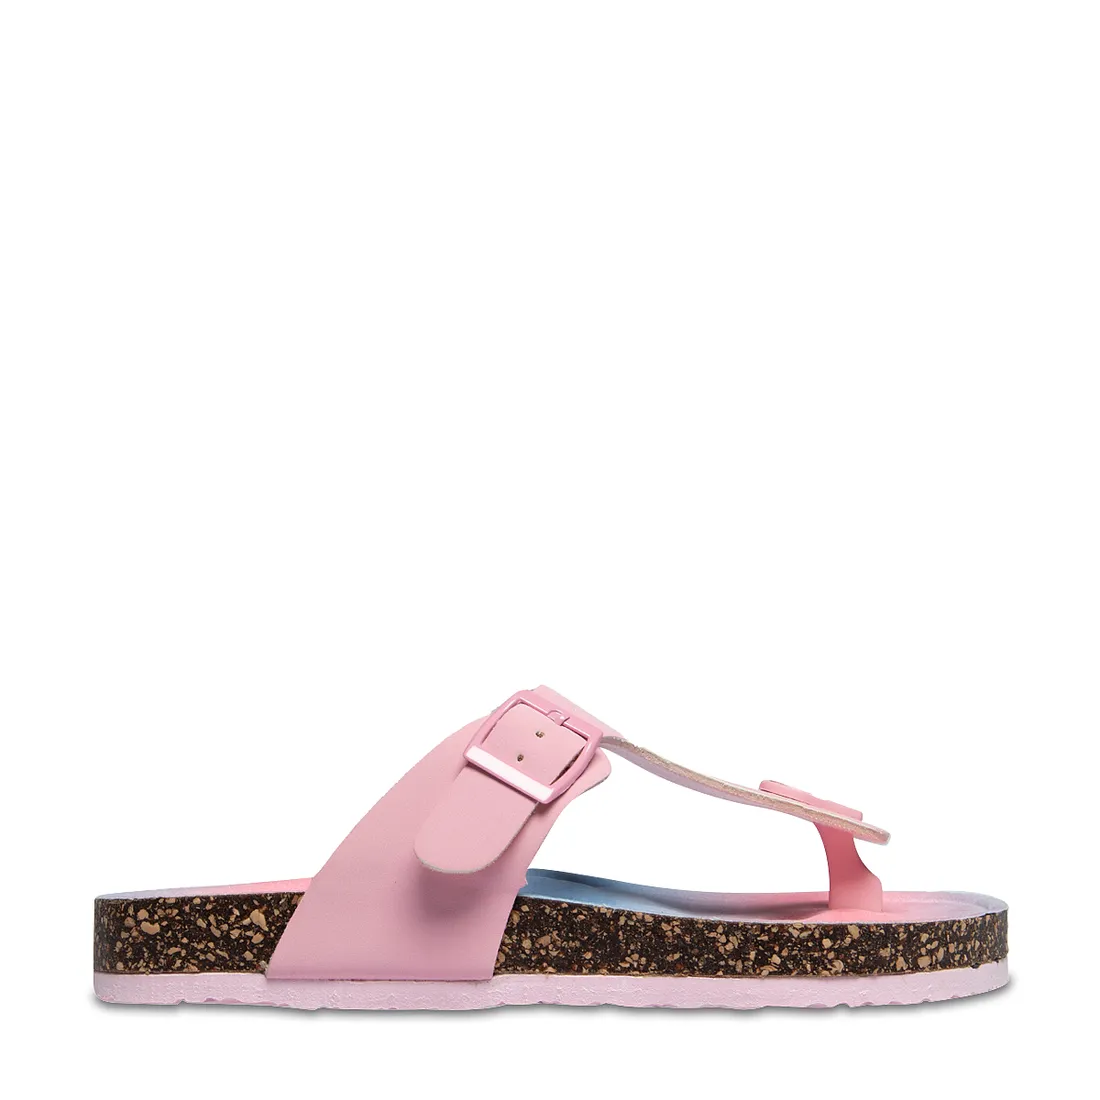 Thong health sandal pink - GIRLS 7-15 YEARS Shoes | Ackermans